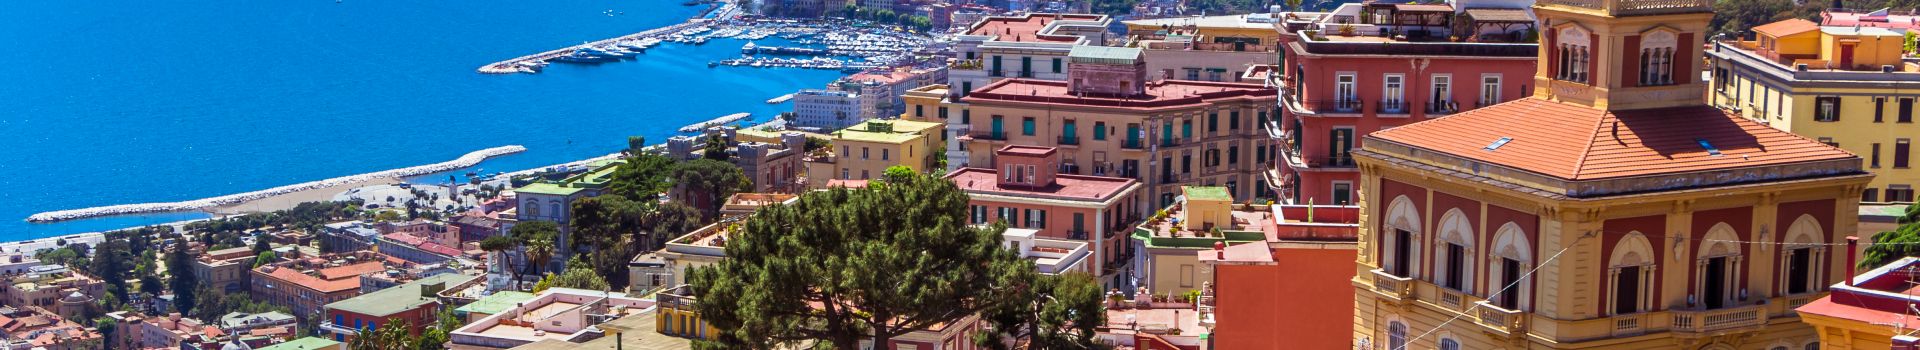 Cheap city breaks to Naples